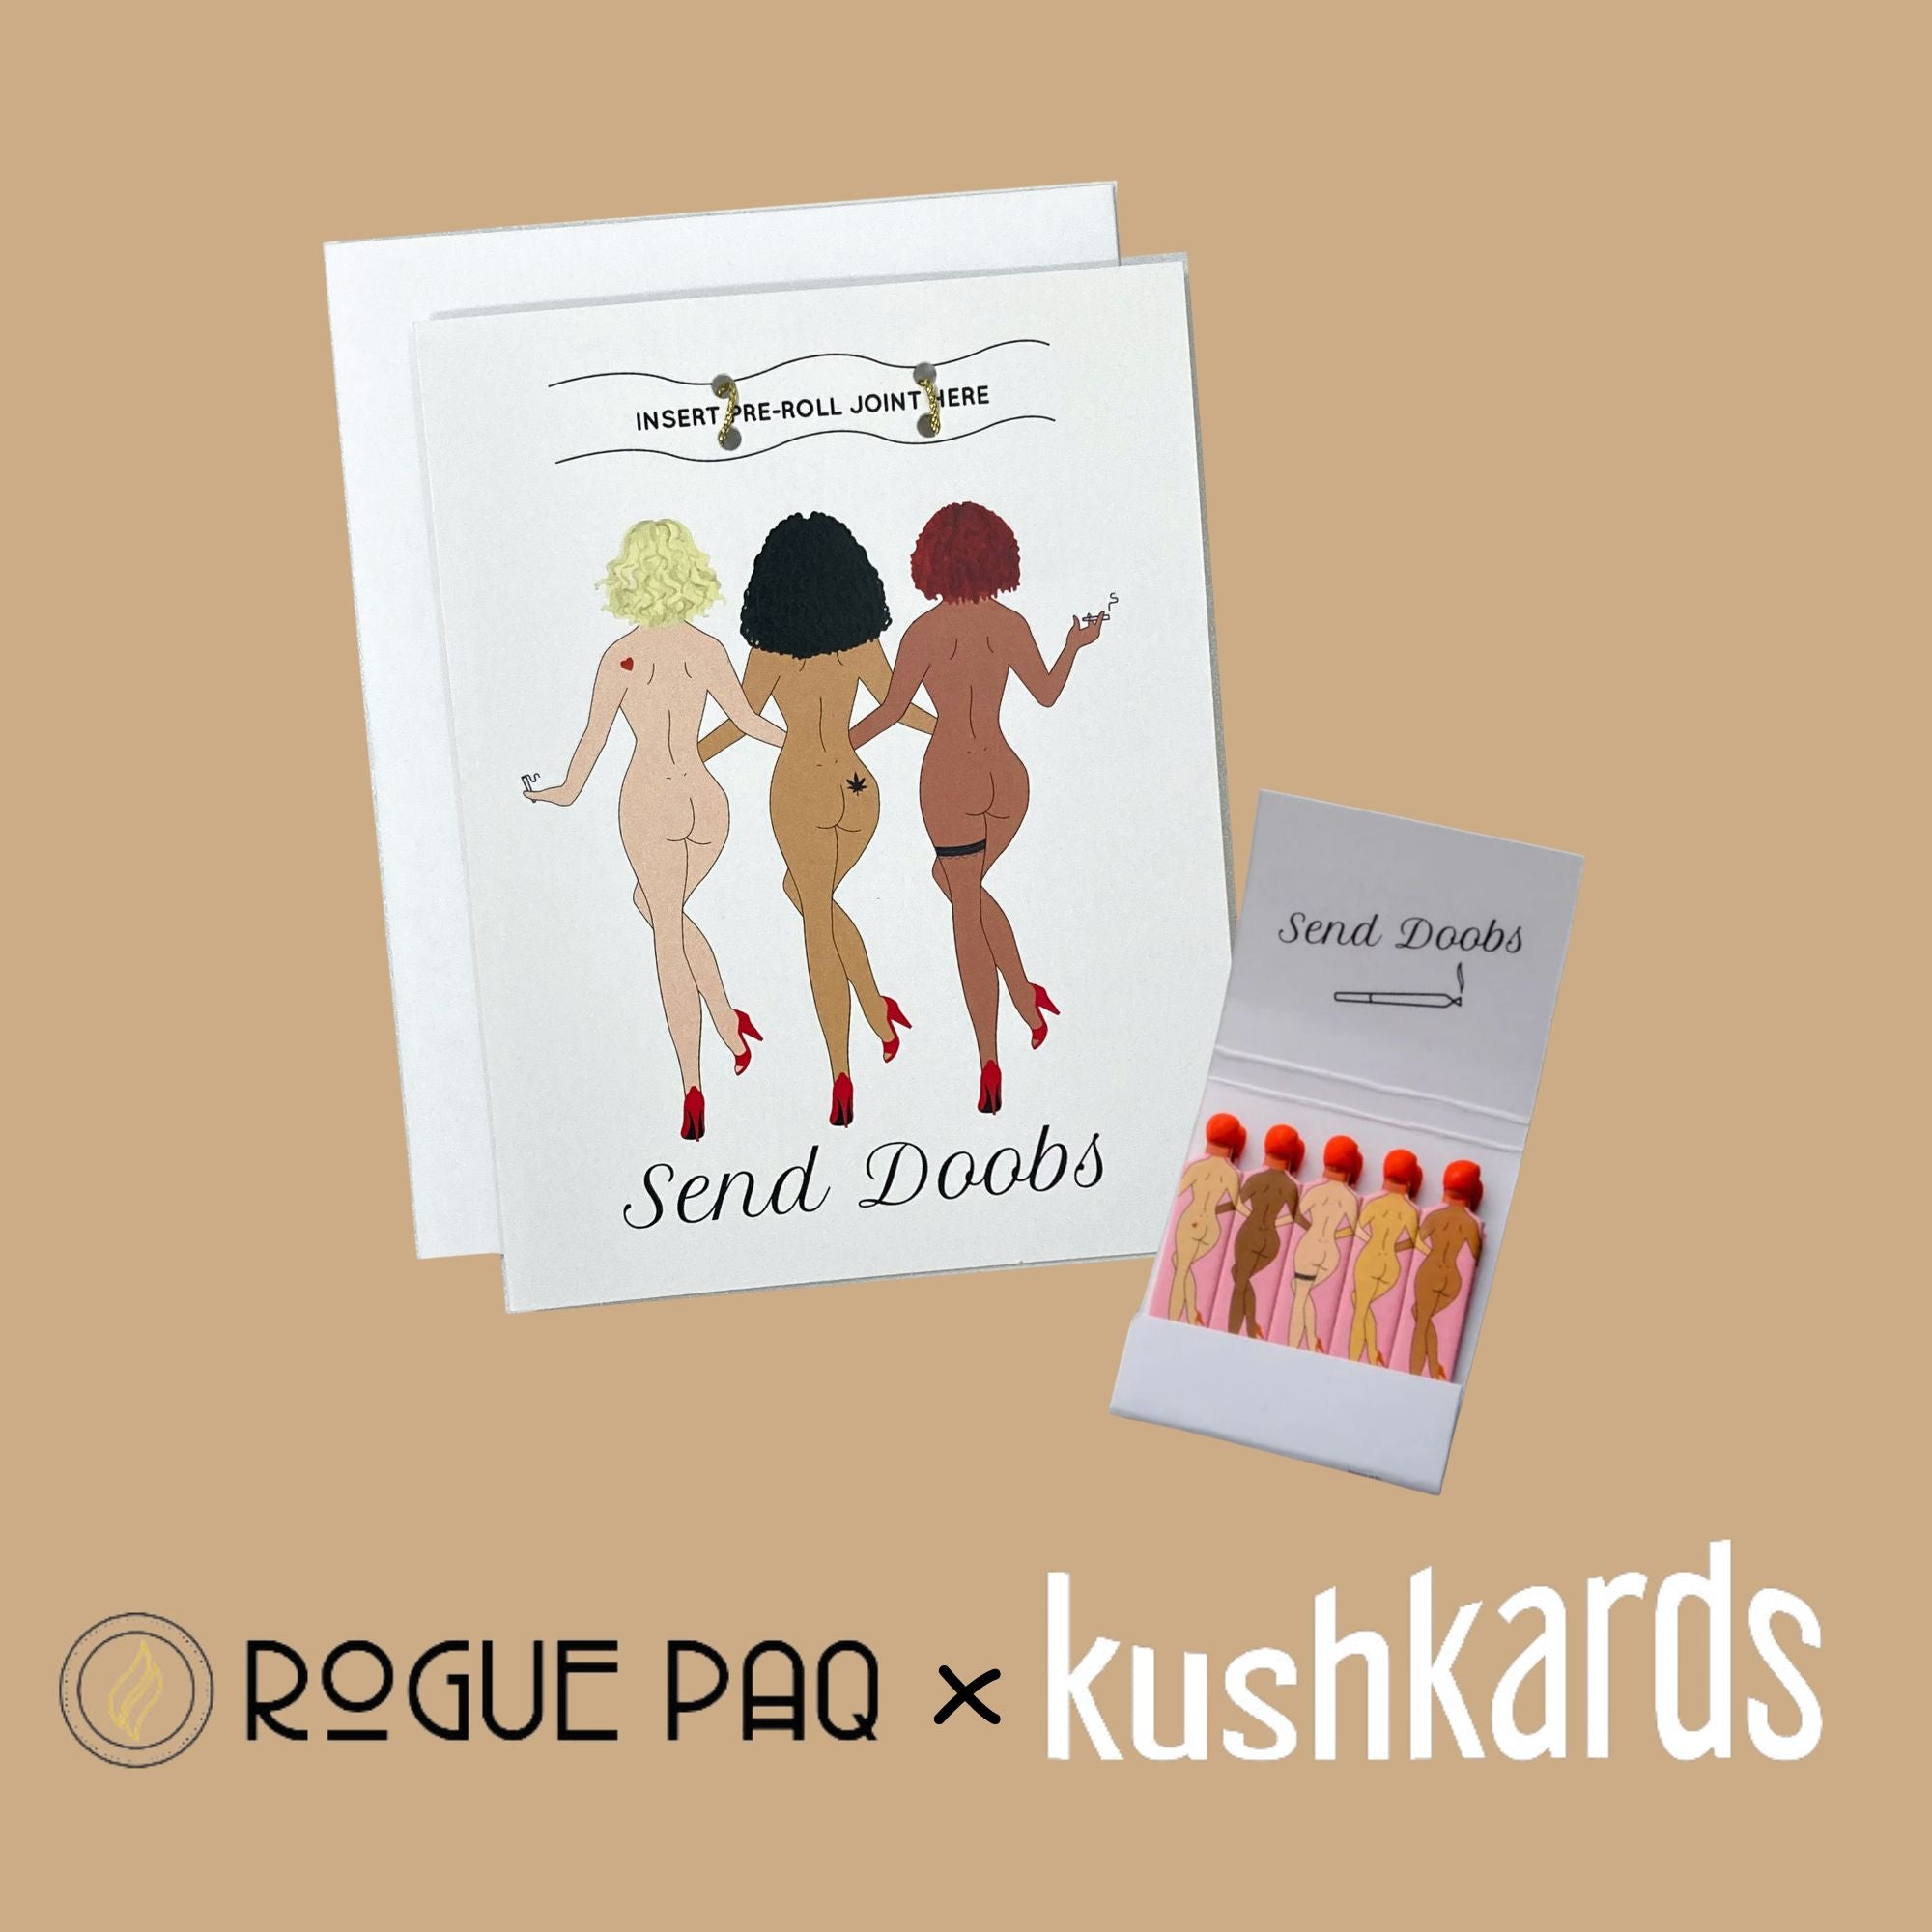 Rogue Paq x Kush Kards SendNudes Send Doobs Greeting Card + Matches